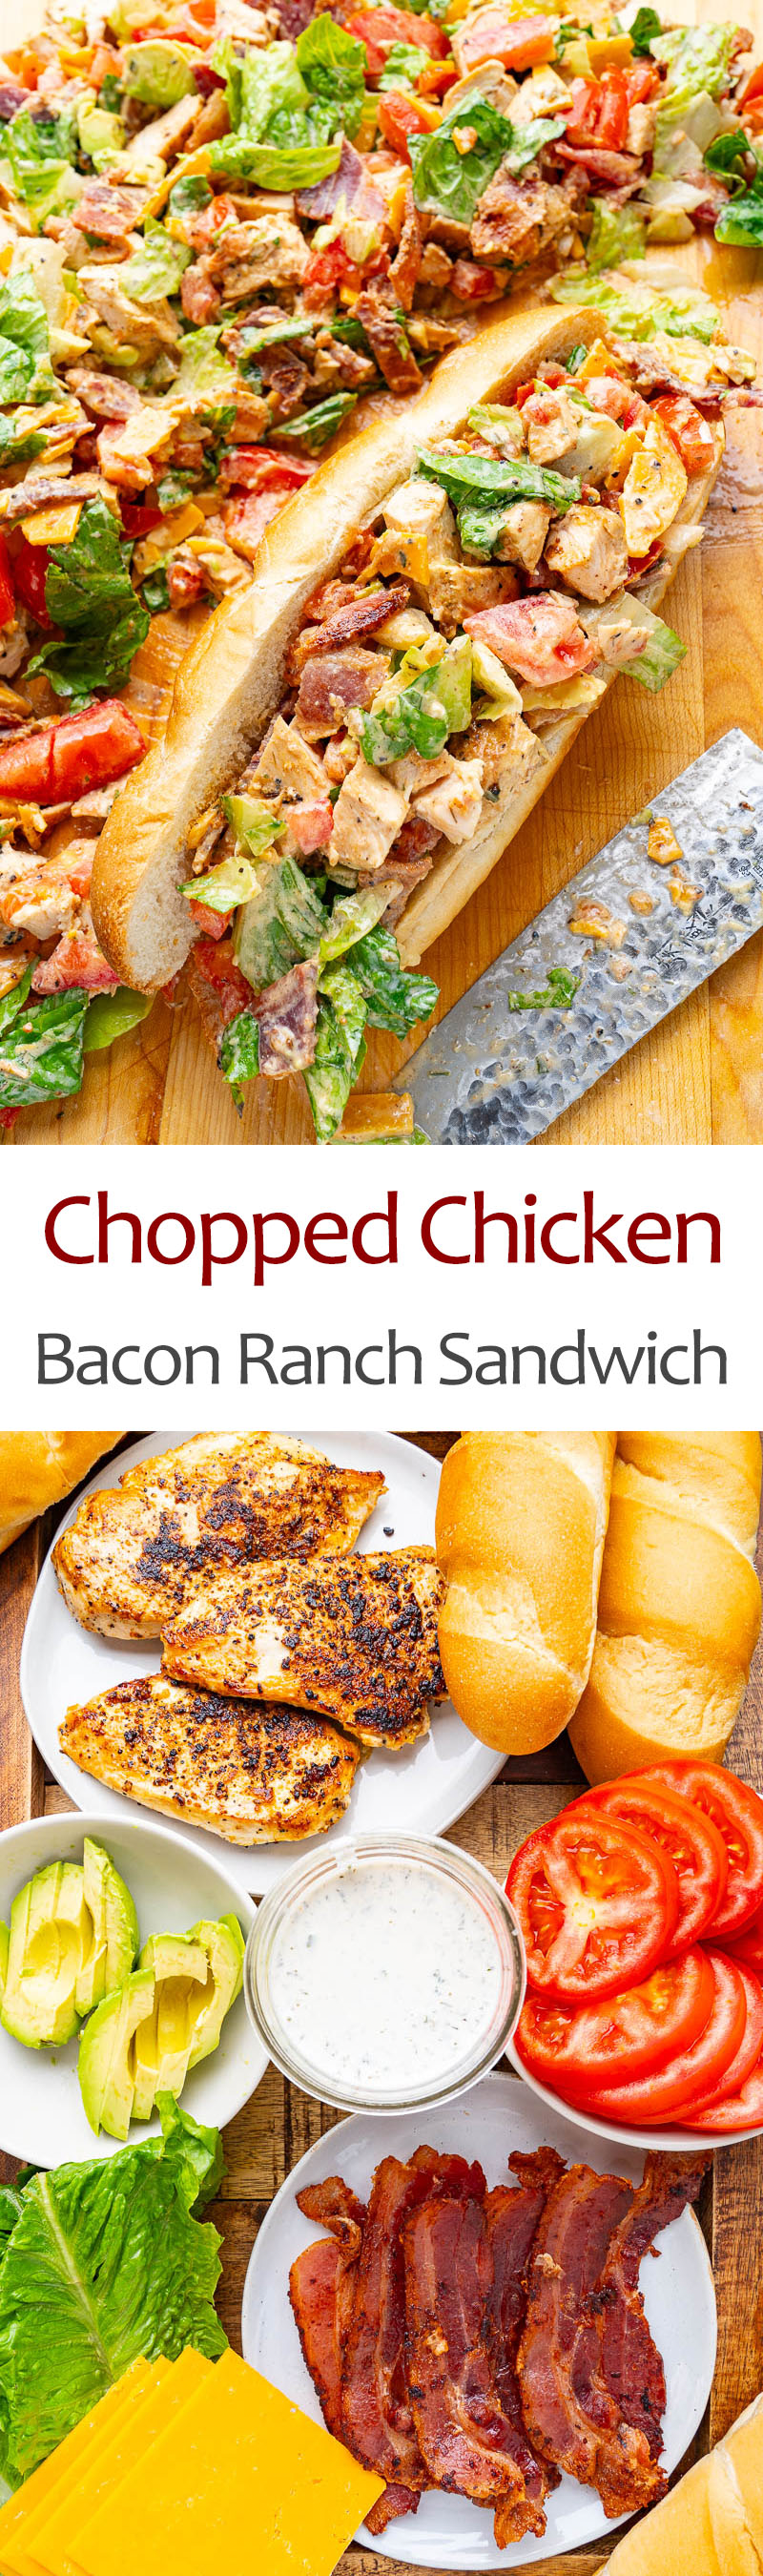 Chopped Chicken Bacon Ranch Sandwich